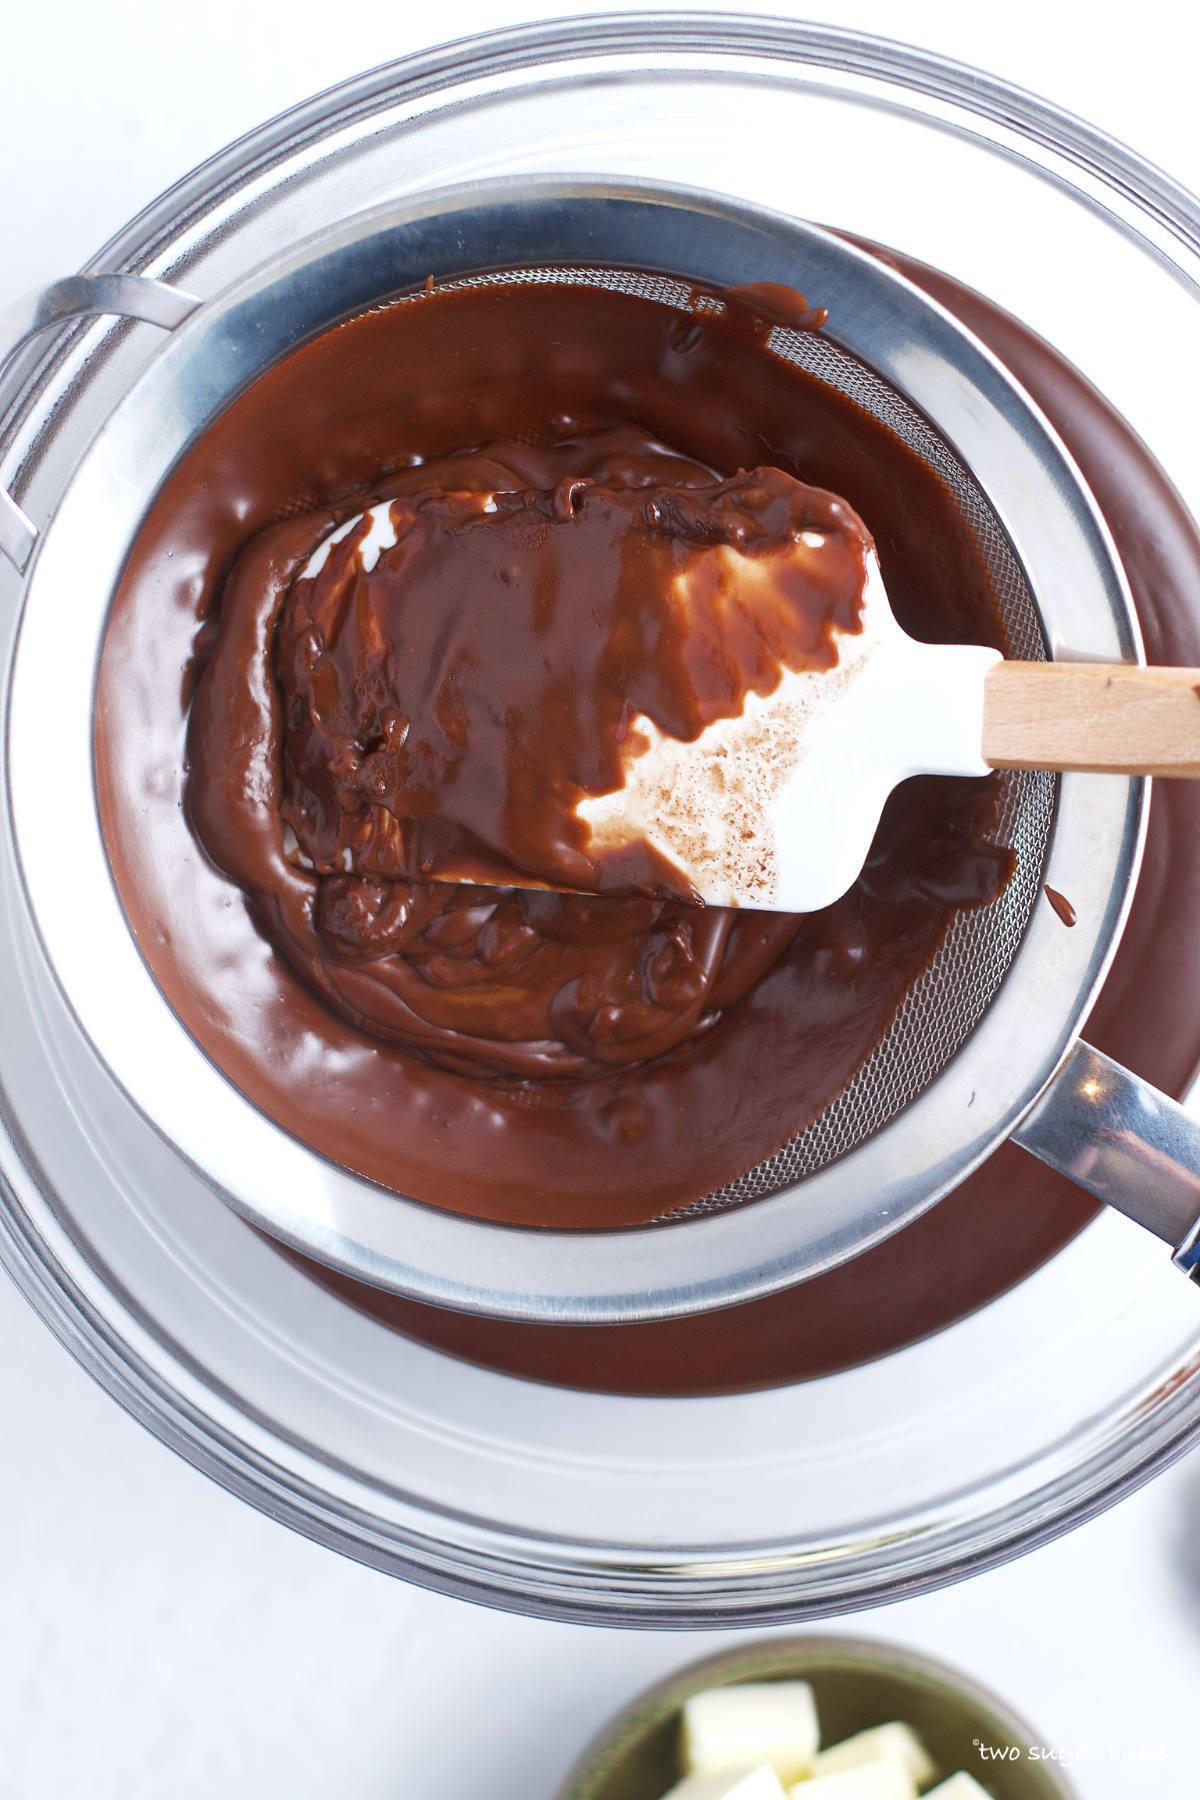 spatula pressing the chocolate pudding through a fine mesh sieve